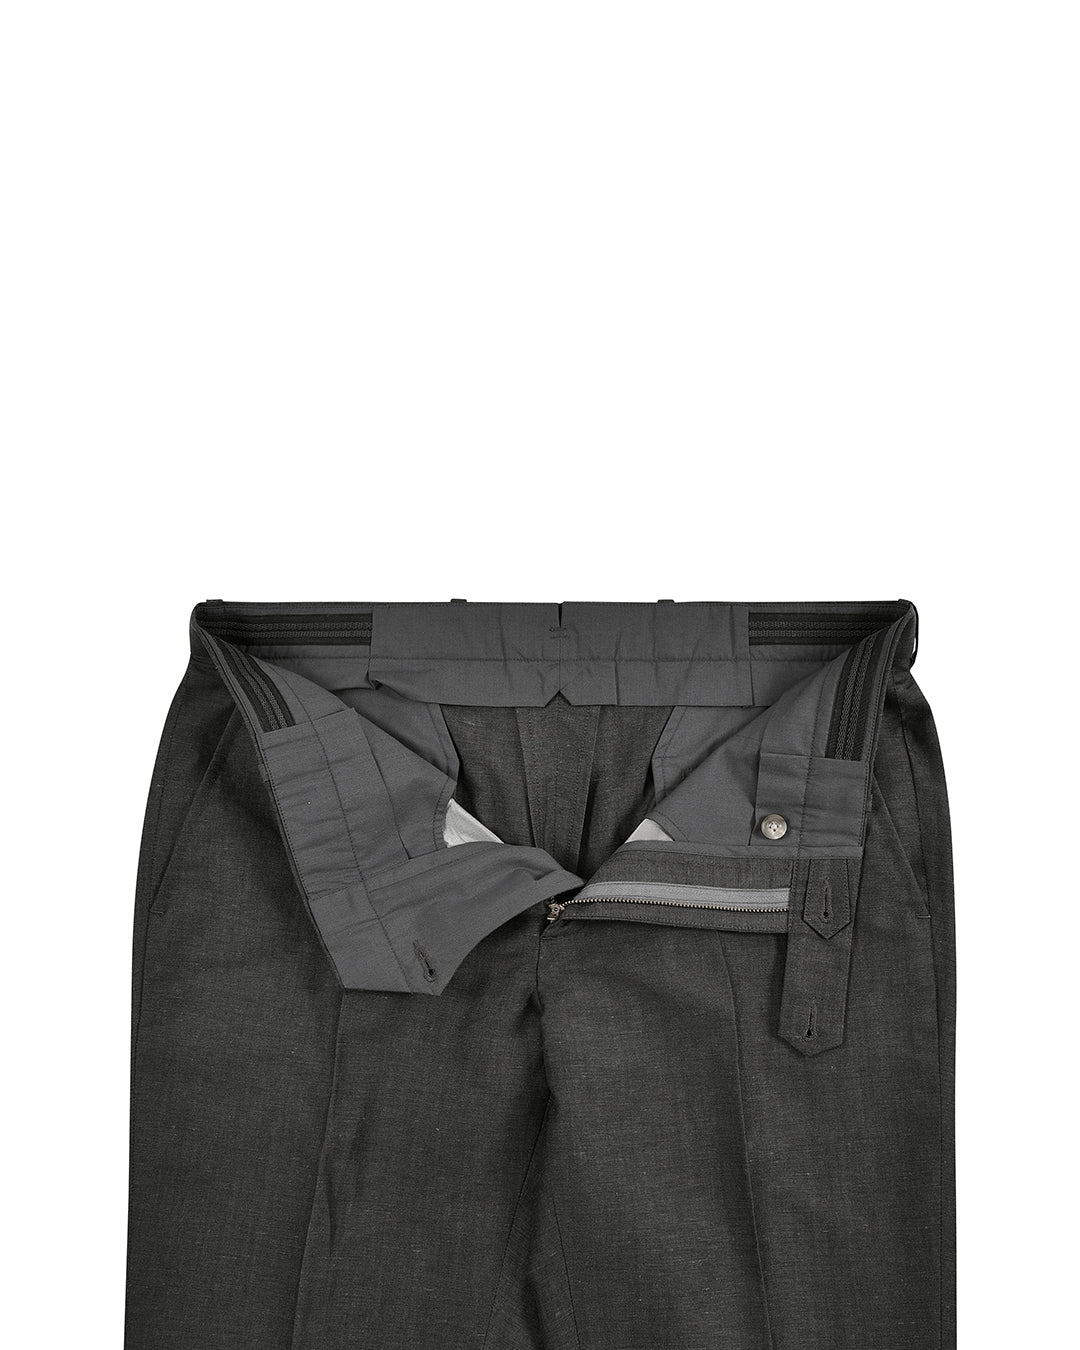 Vitale Barberis Canonico -  Dark Grey Wool Linen Dress Pant